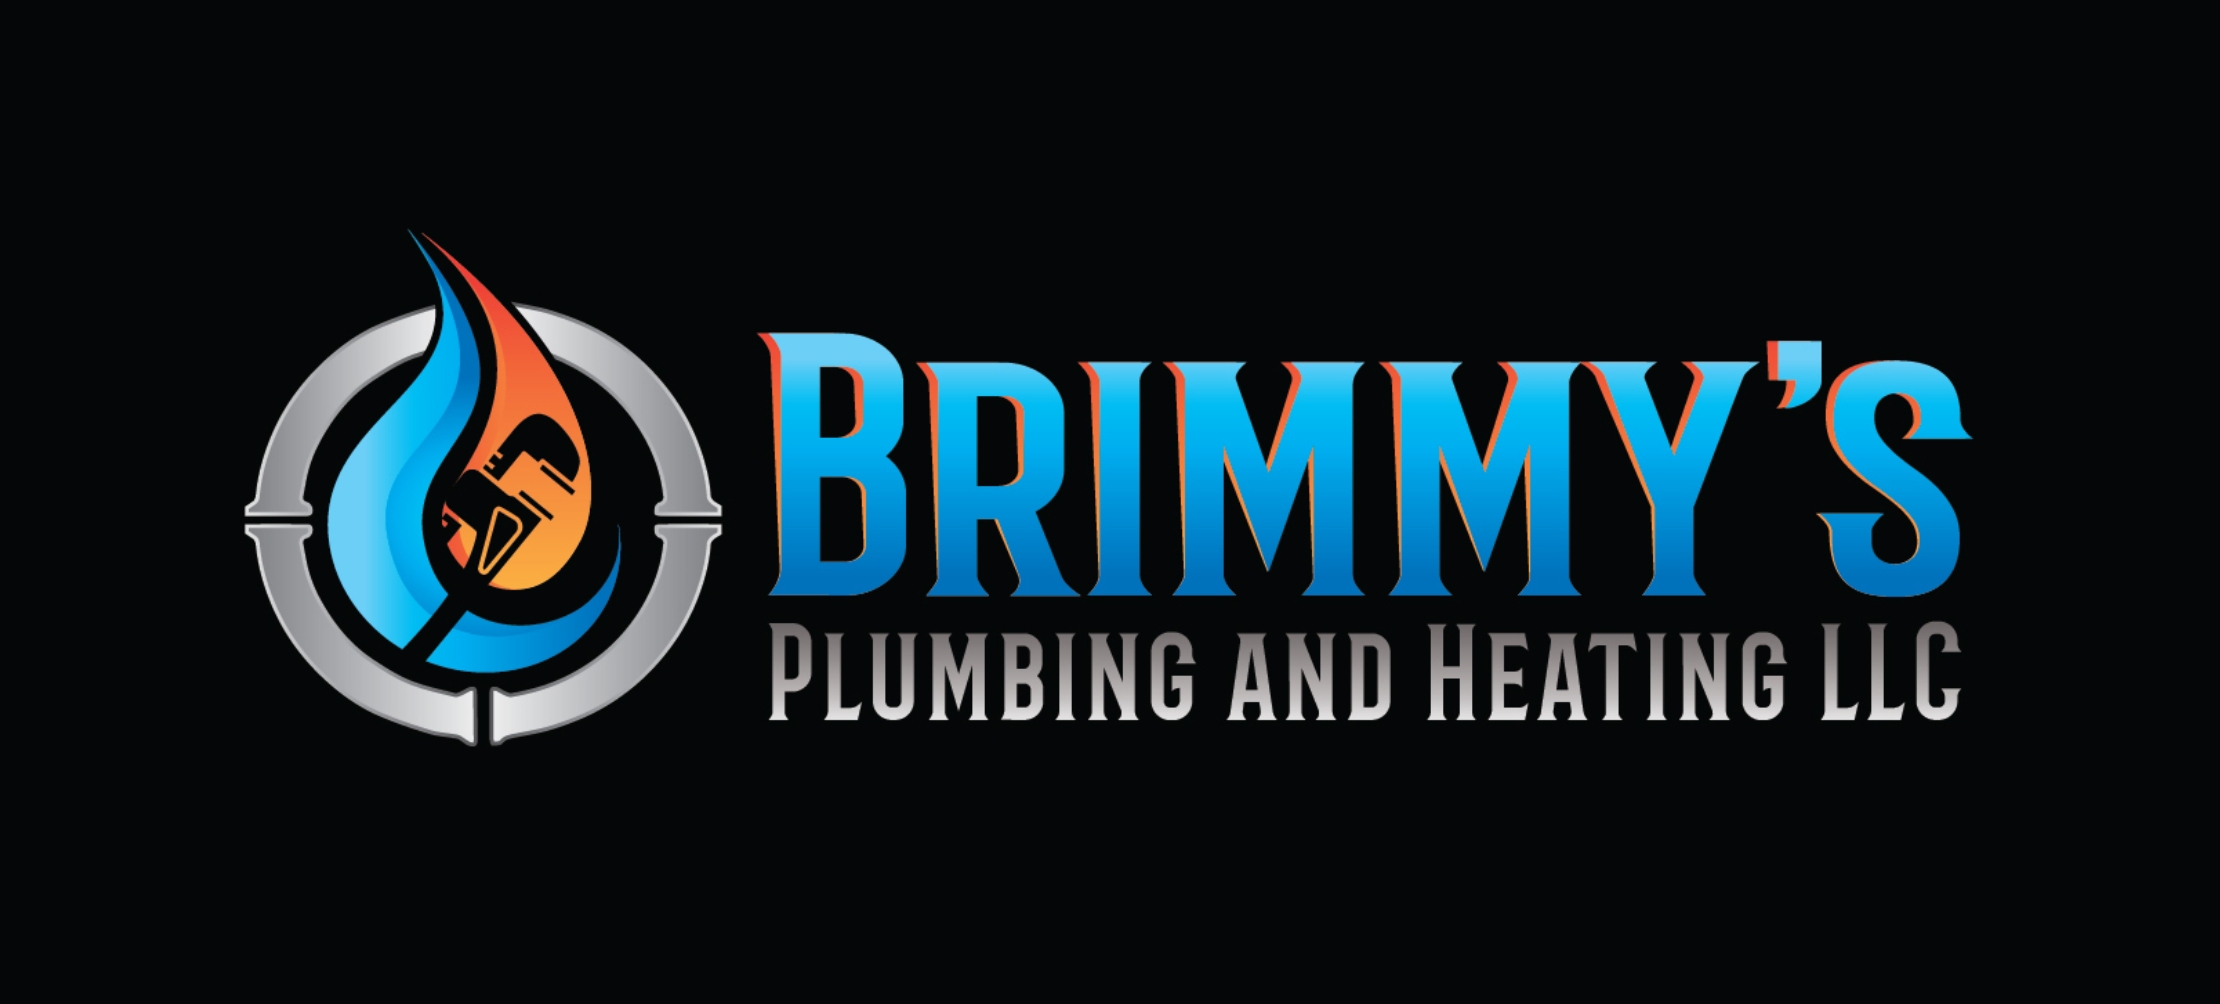 Brimmy's Plumbing and Heating, LLC Logo